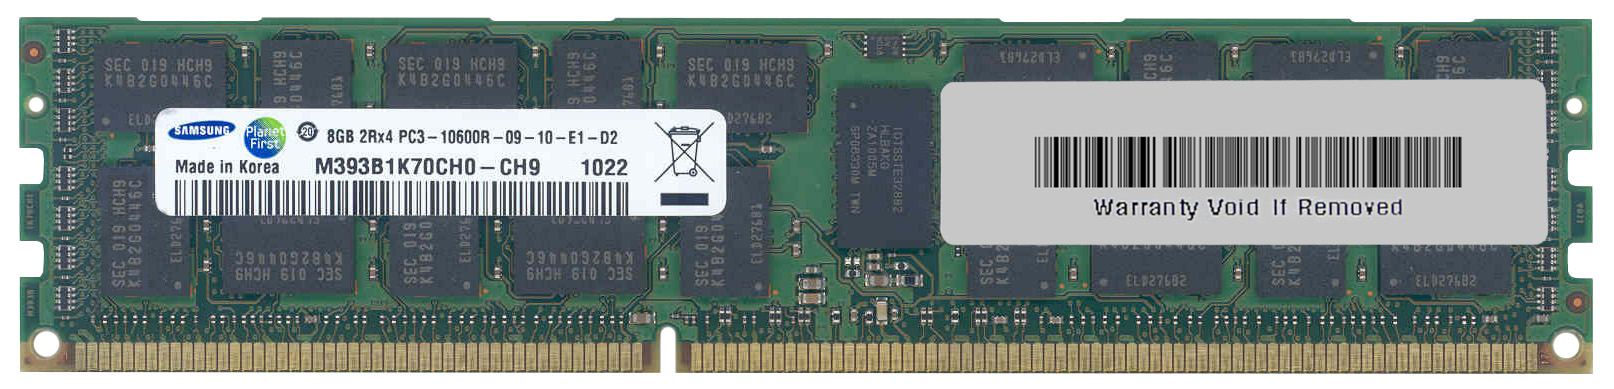 3DHPWW562AV 3D Memory 24GB Kit (3 X 8GB) PC3-10600 DDR3-1333MHz ECC Registered CL9 240-Pin DIMM Dual Rank Memory P/N (compatible with WW562AV, KVR1333D3D4R9SK3/24G, KFJ-PM313K3/24G, KTD-PE313K3/24G, KTH-PL313K3/24G)